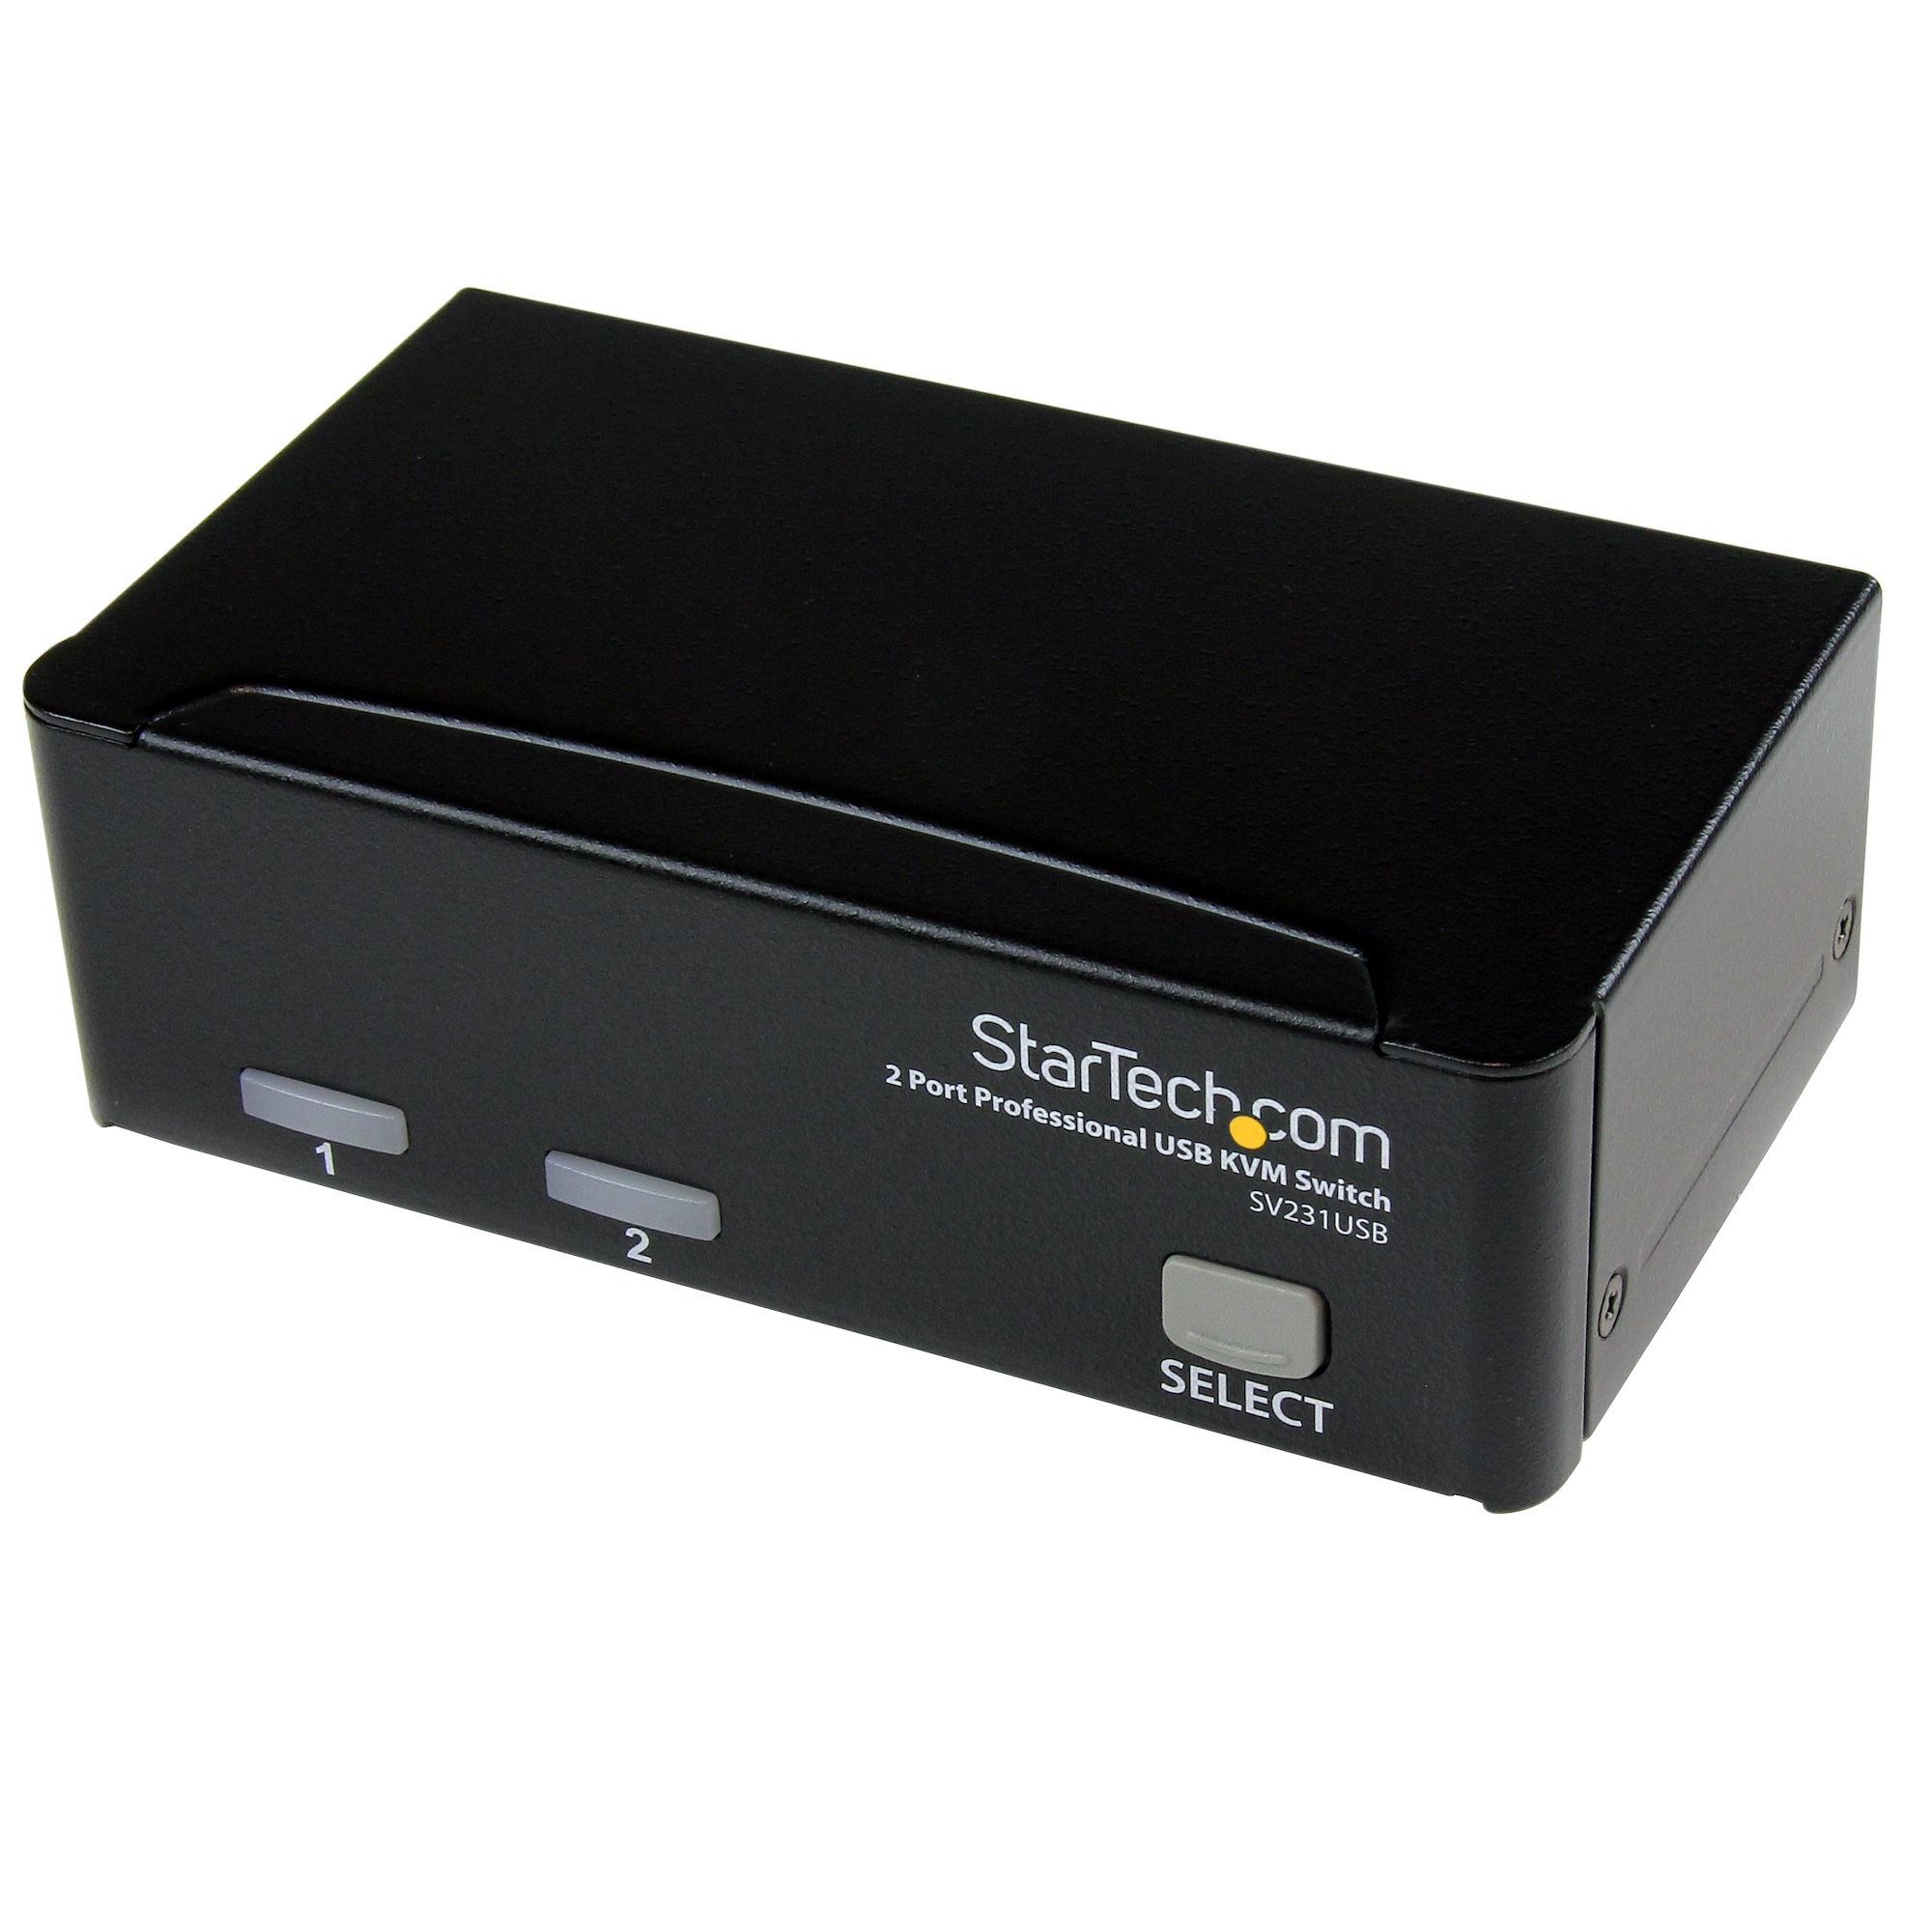 2 Puertos vídeo VGA/USB Conmutador Switch Profesional KVM Color Negro StarTech.com SV231USBGB 